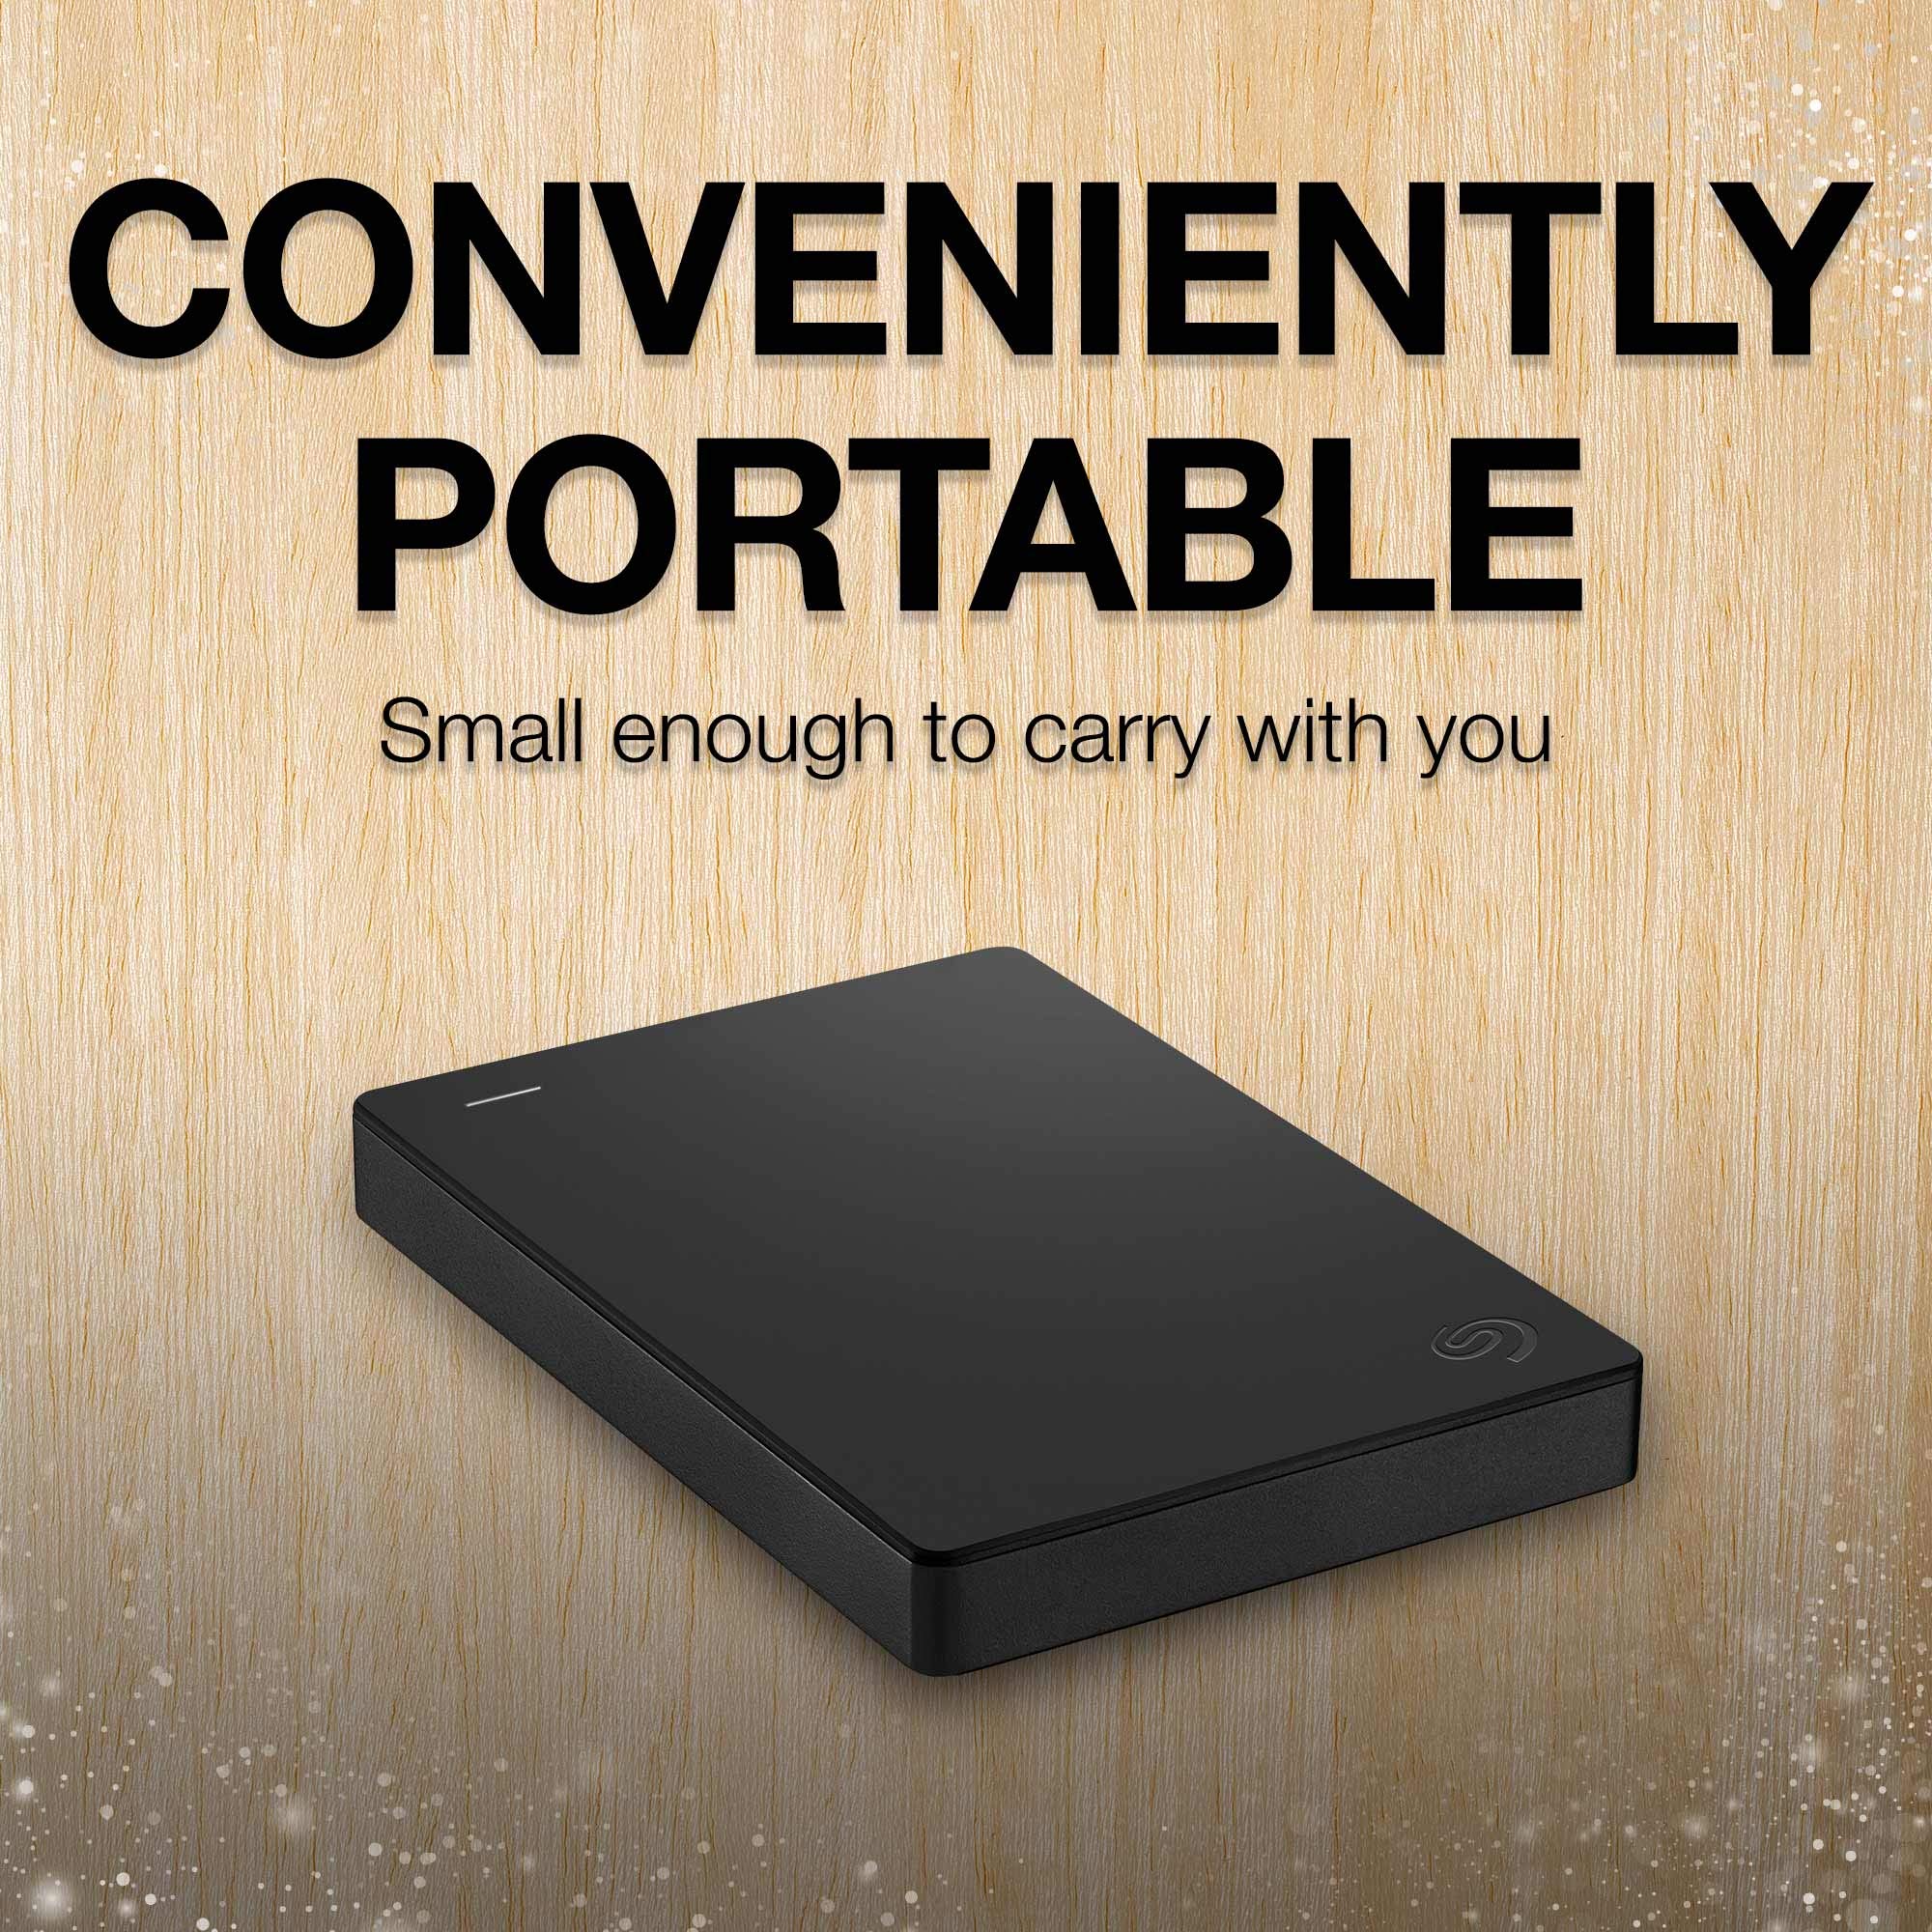 Seagate Portable 1TB External Hard Drive HDD – USB 3.0 for PC, Mac, PlayStation, & Xbox, 1-Year Rescue Service (STGX1000400) , Black